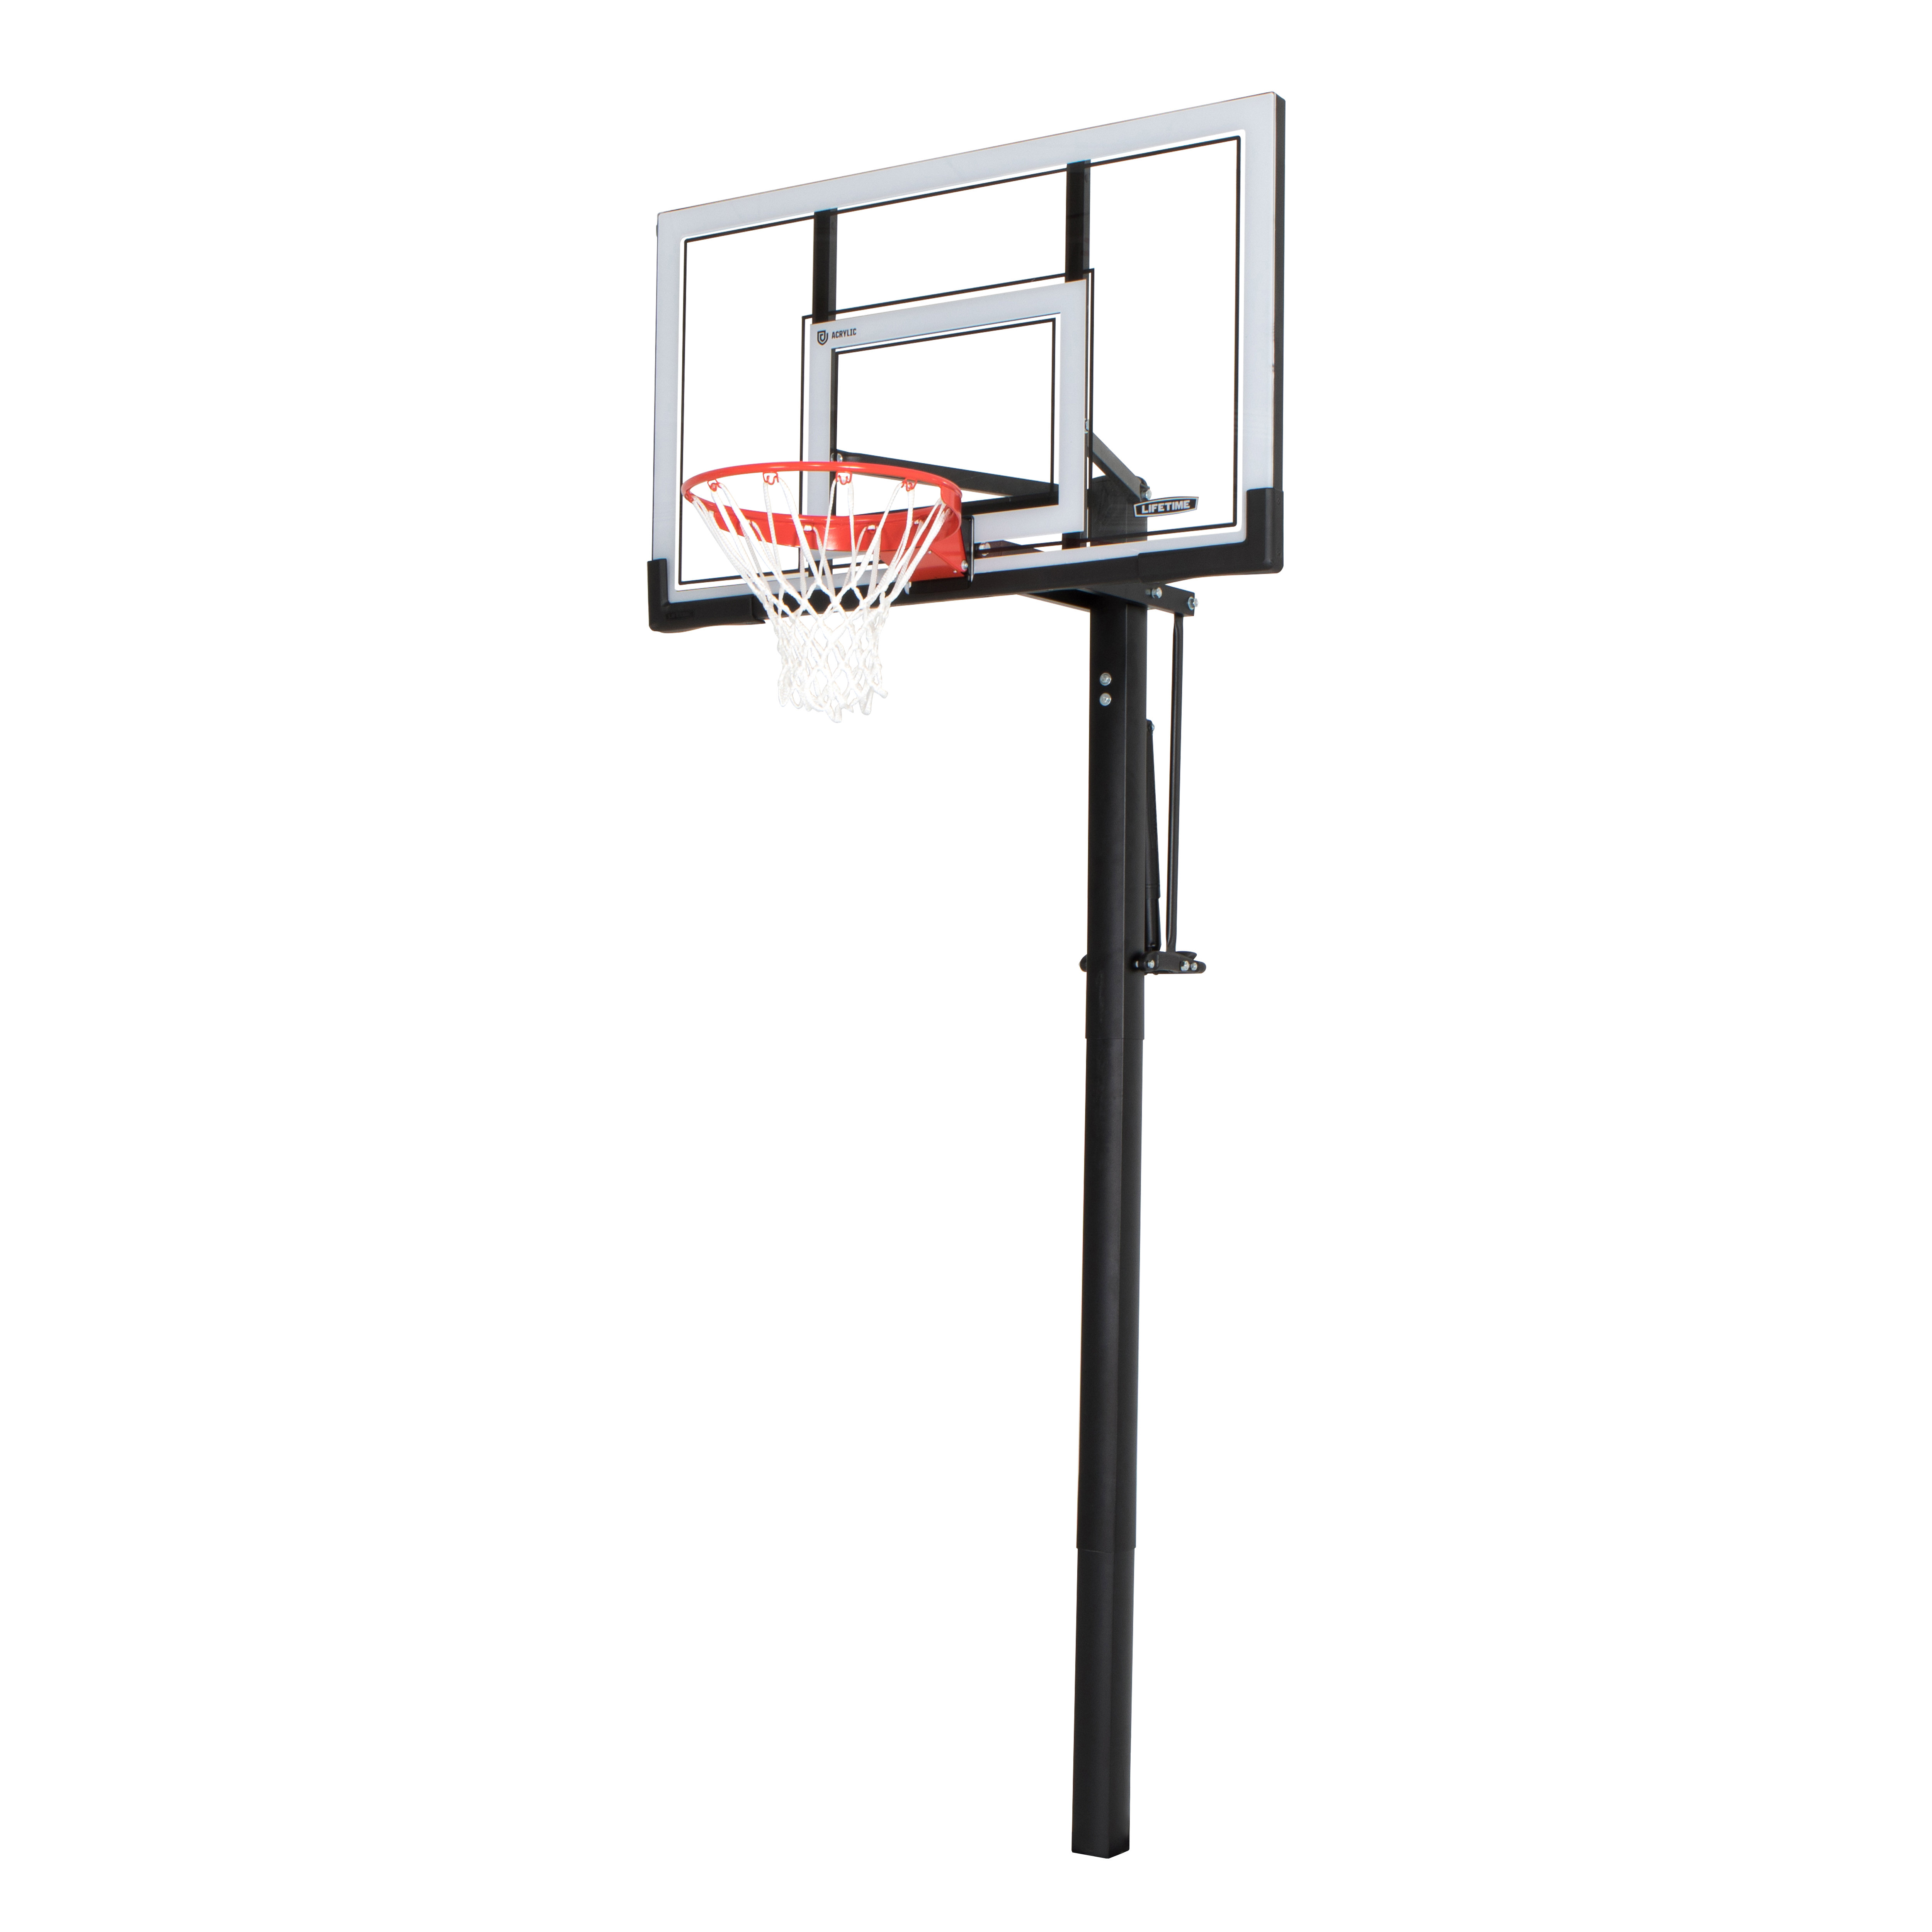 Lifetime Height Adjustable Portable Basketball Hoop (50 Polycarbonate  Backboard) & Reviews - Wayfair Canada